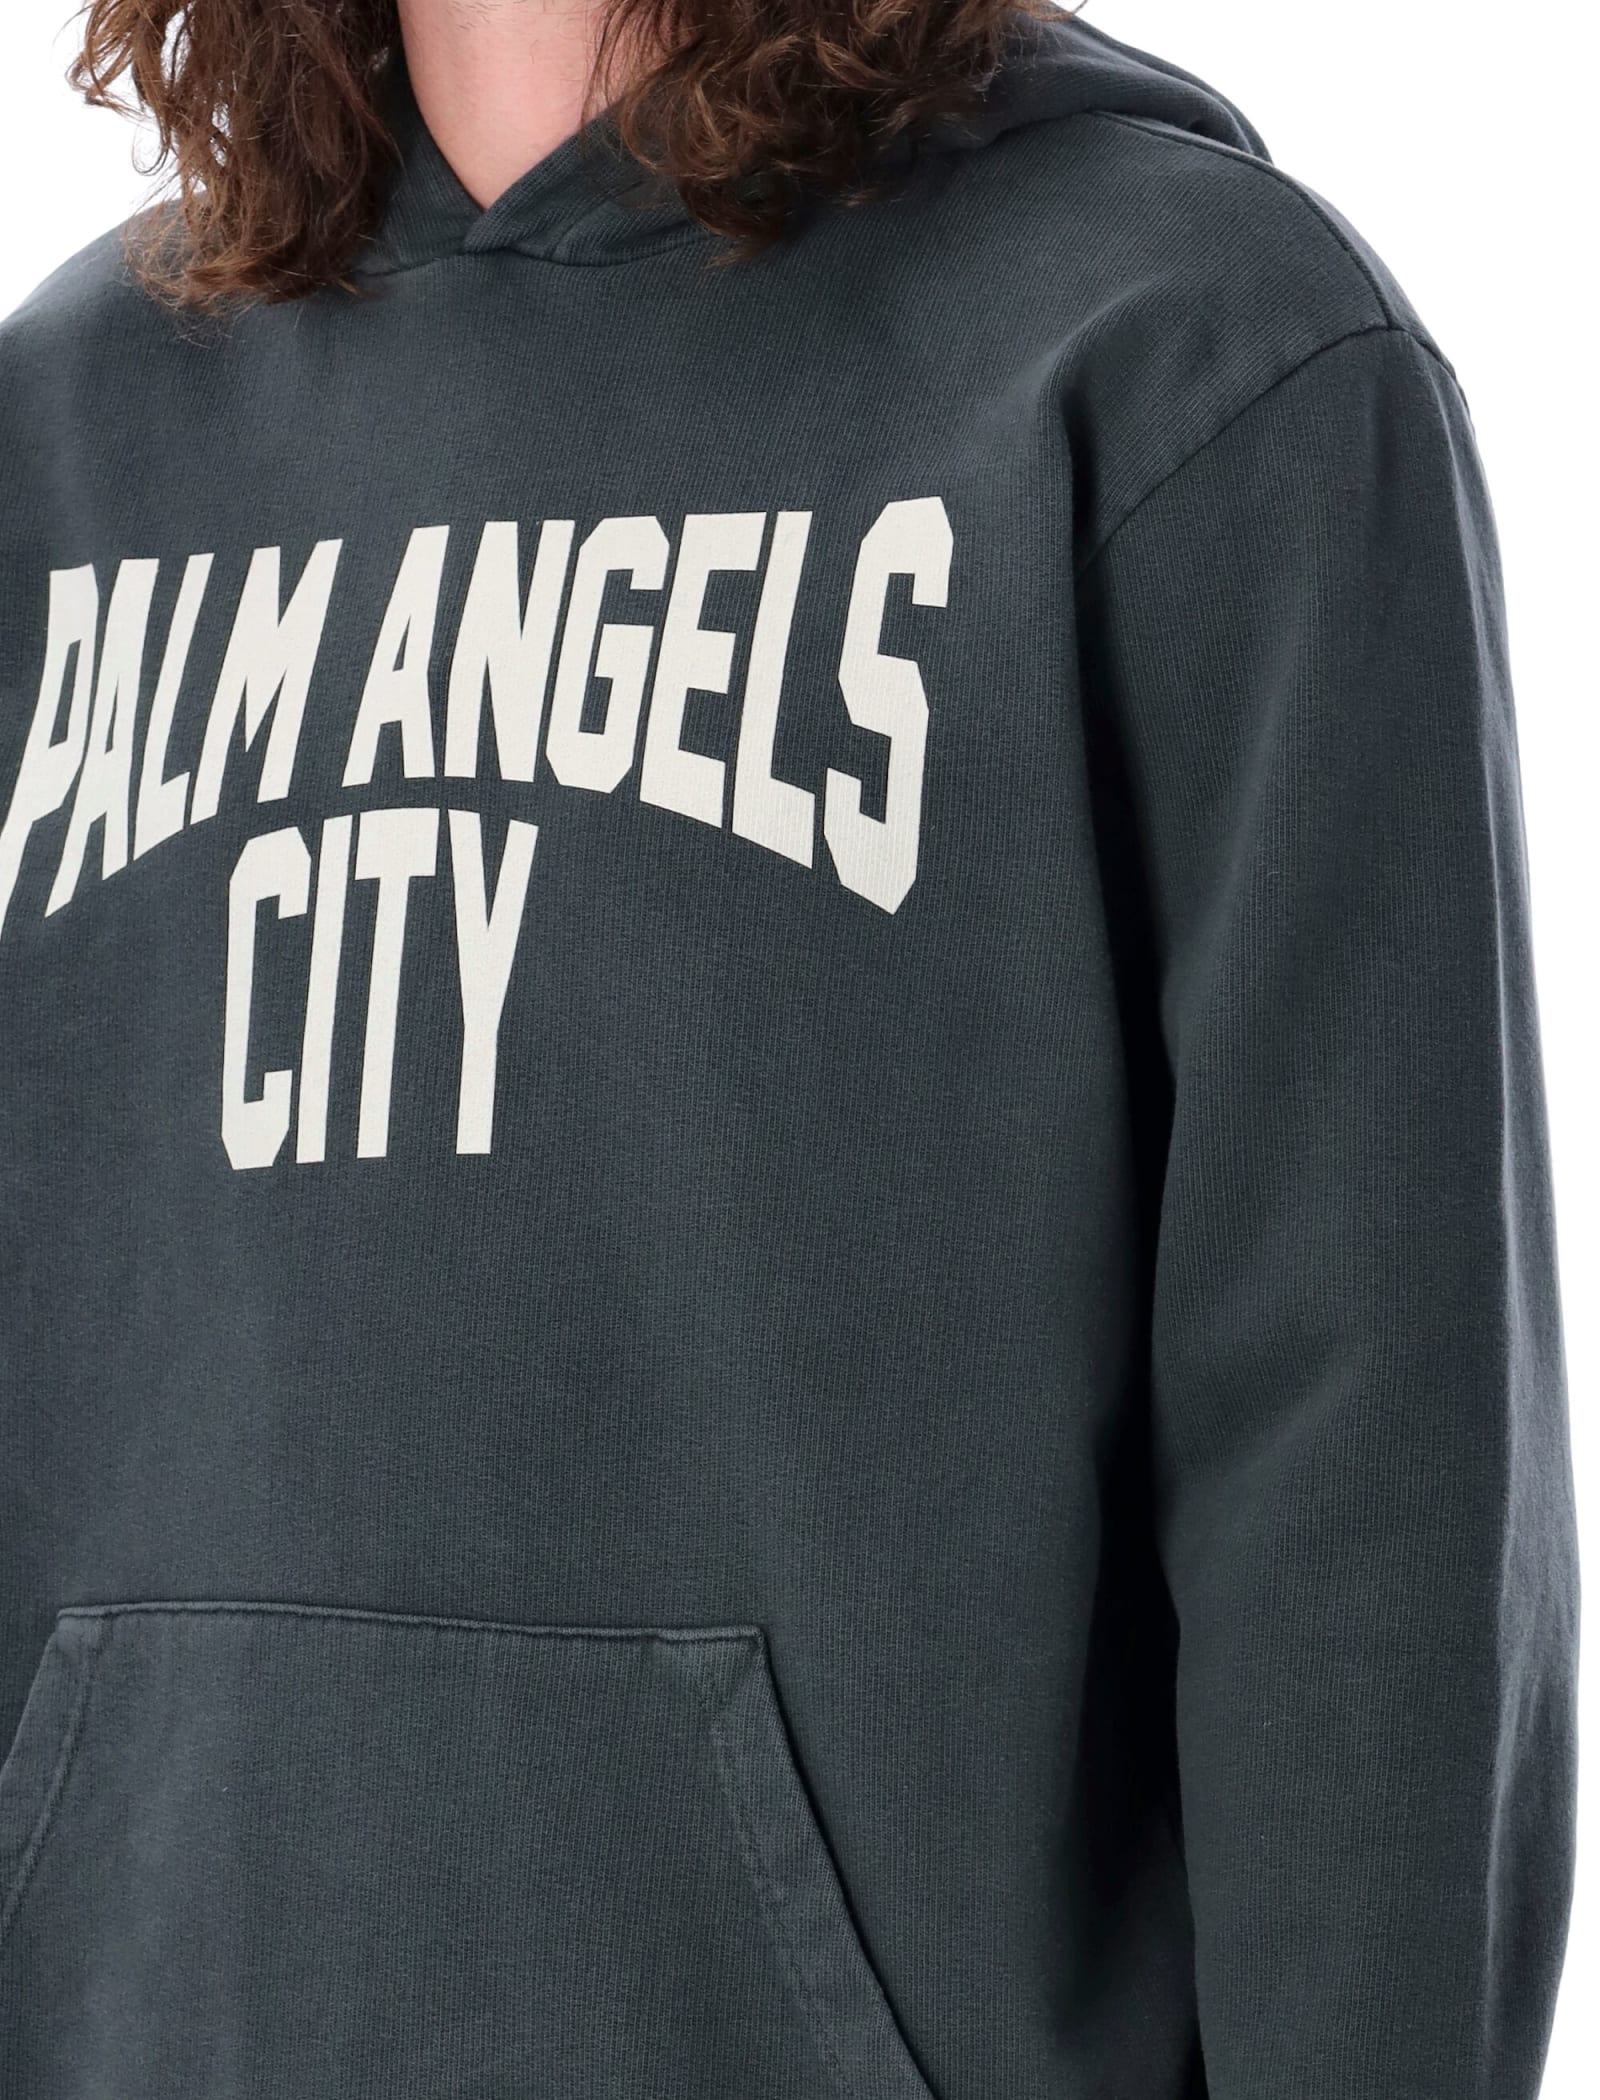 Shop Palm Angels Pa City Washed Hoodie In Darkk Grey